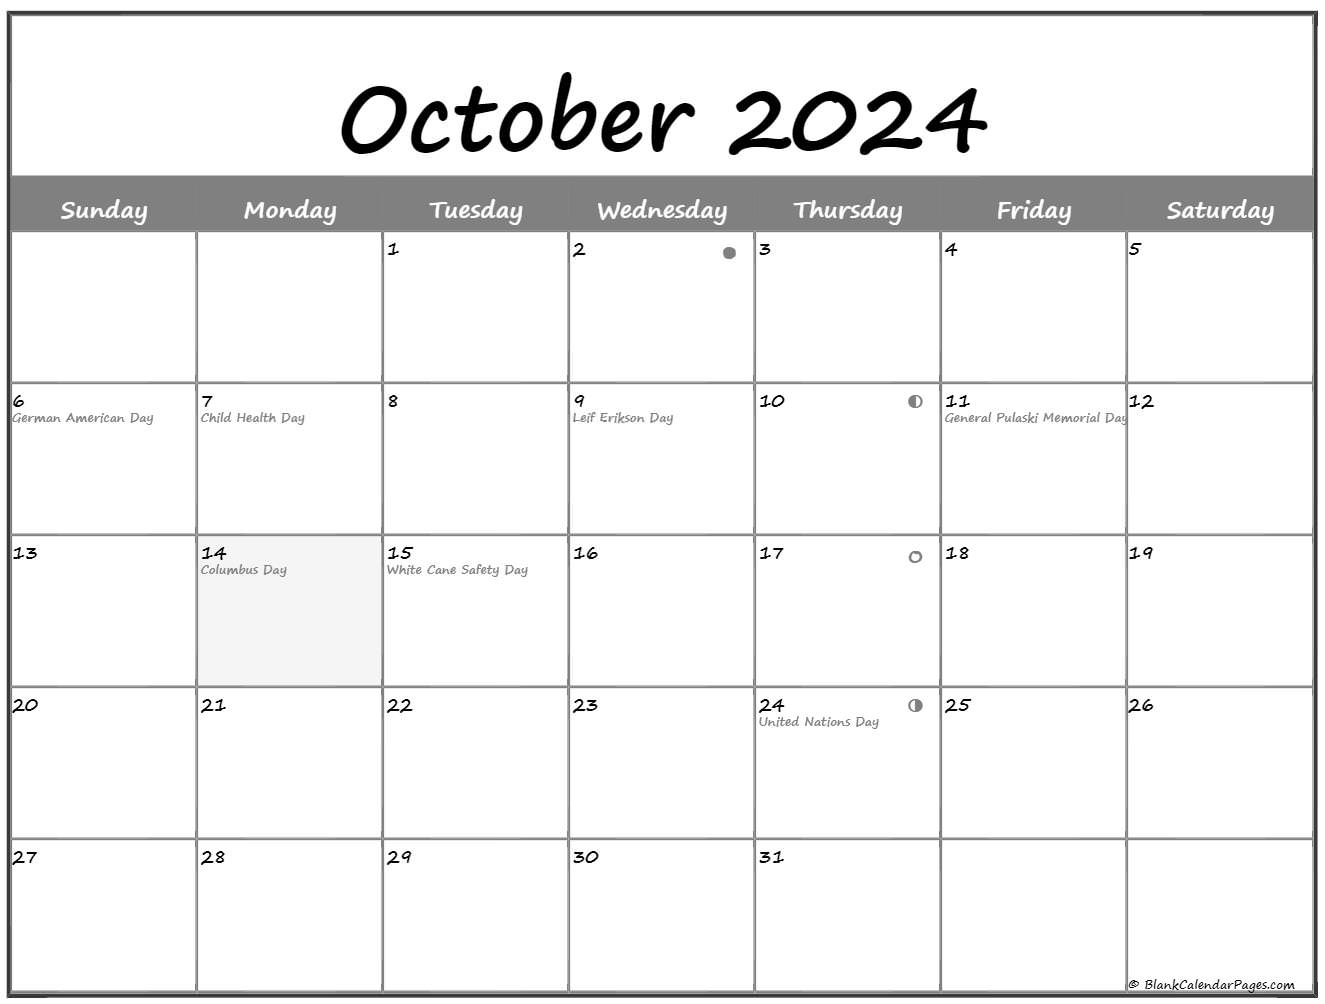 Full Moon Calendar October 2022 October 2022 Lunar Calendar | Moon Phase Calendar